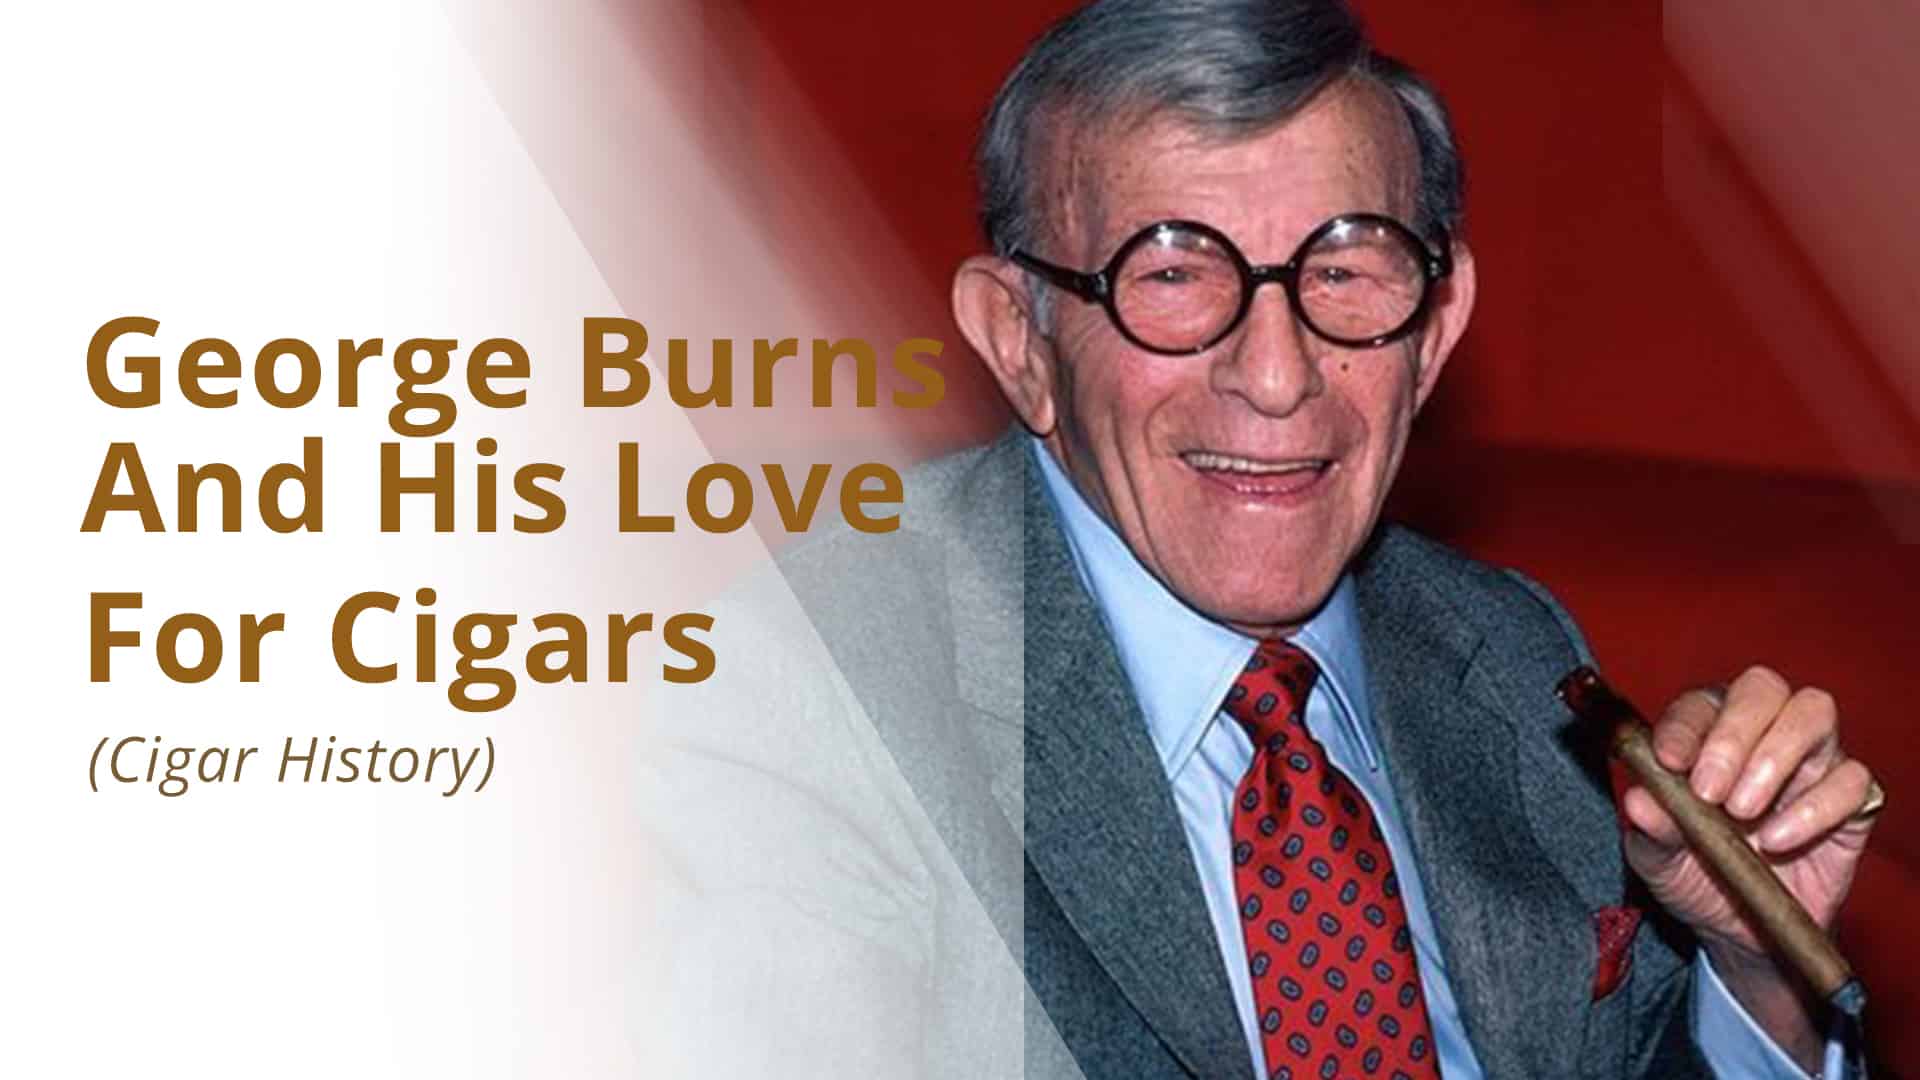 What cigars did George Burns smoke